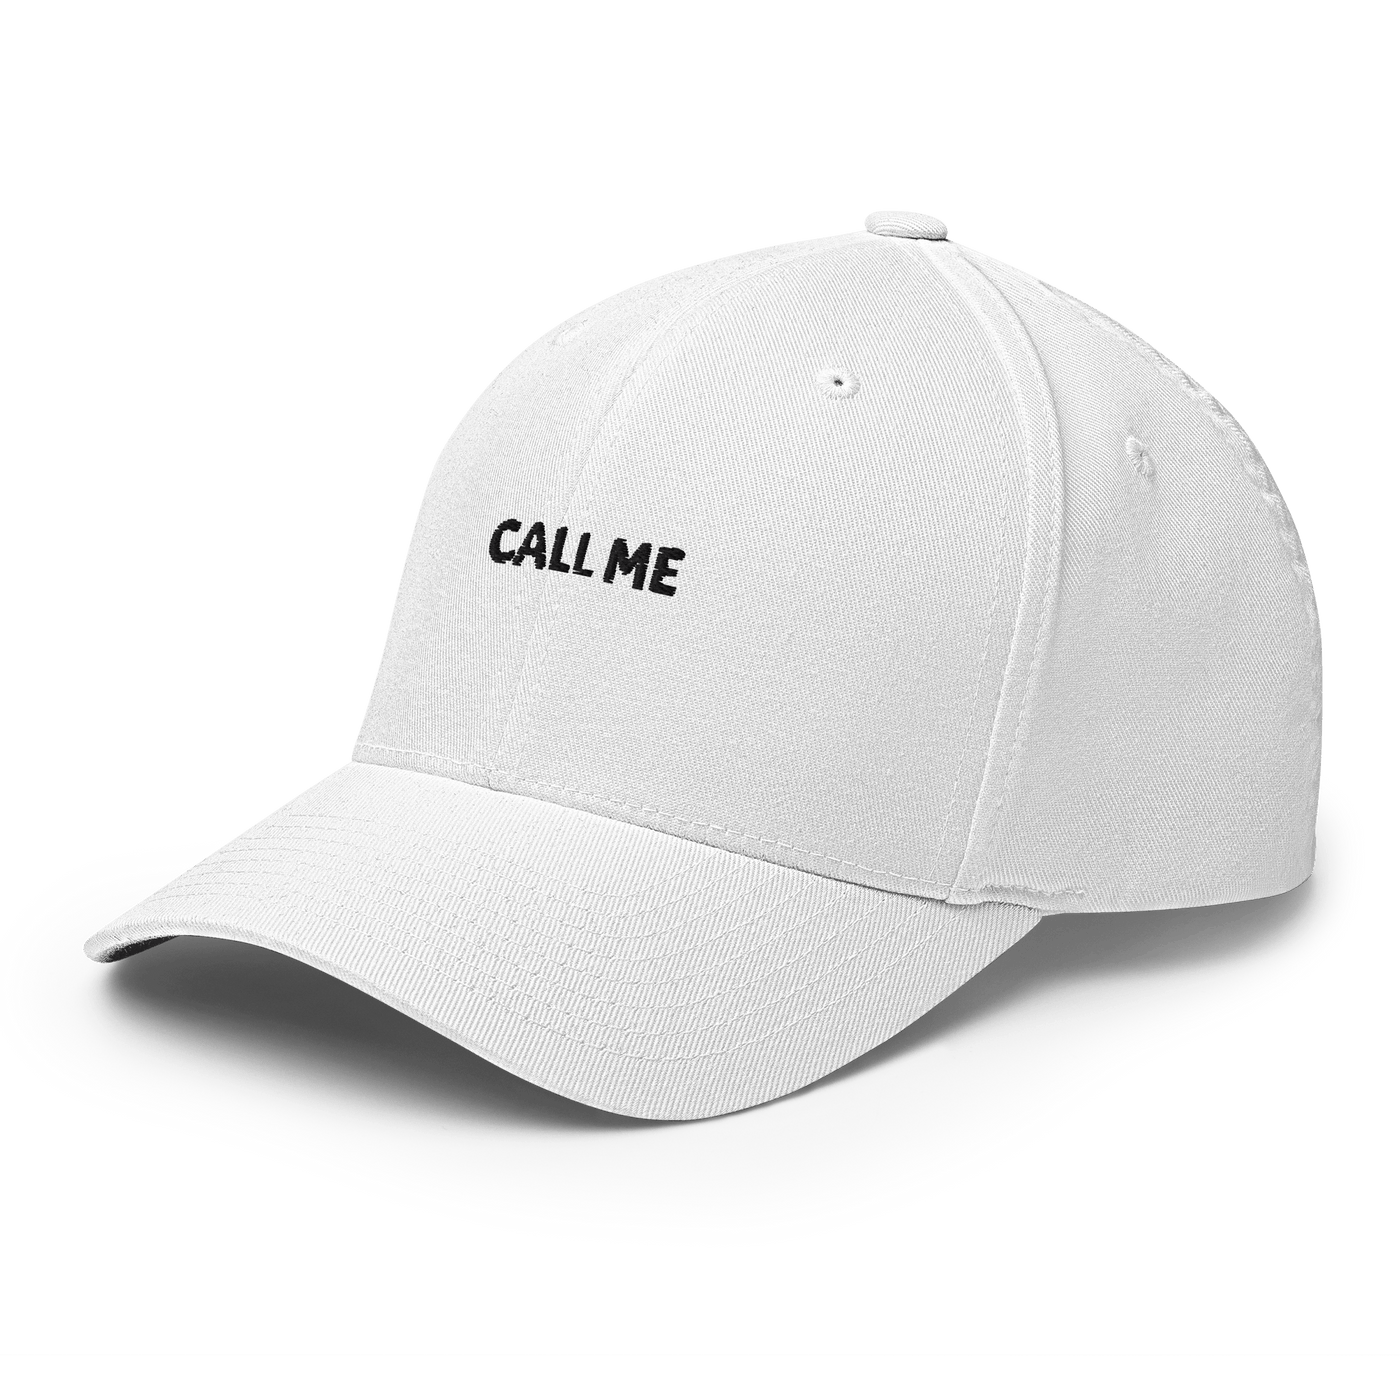 Call Me Flexfit Cap - White - S/M - Just Another Cap Store